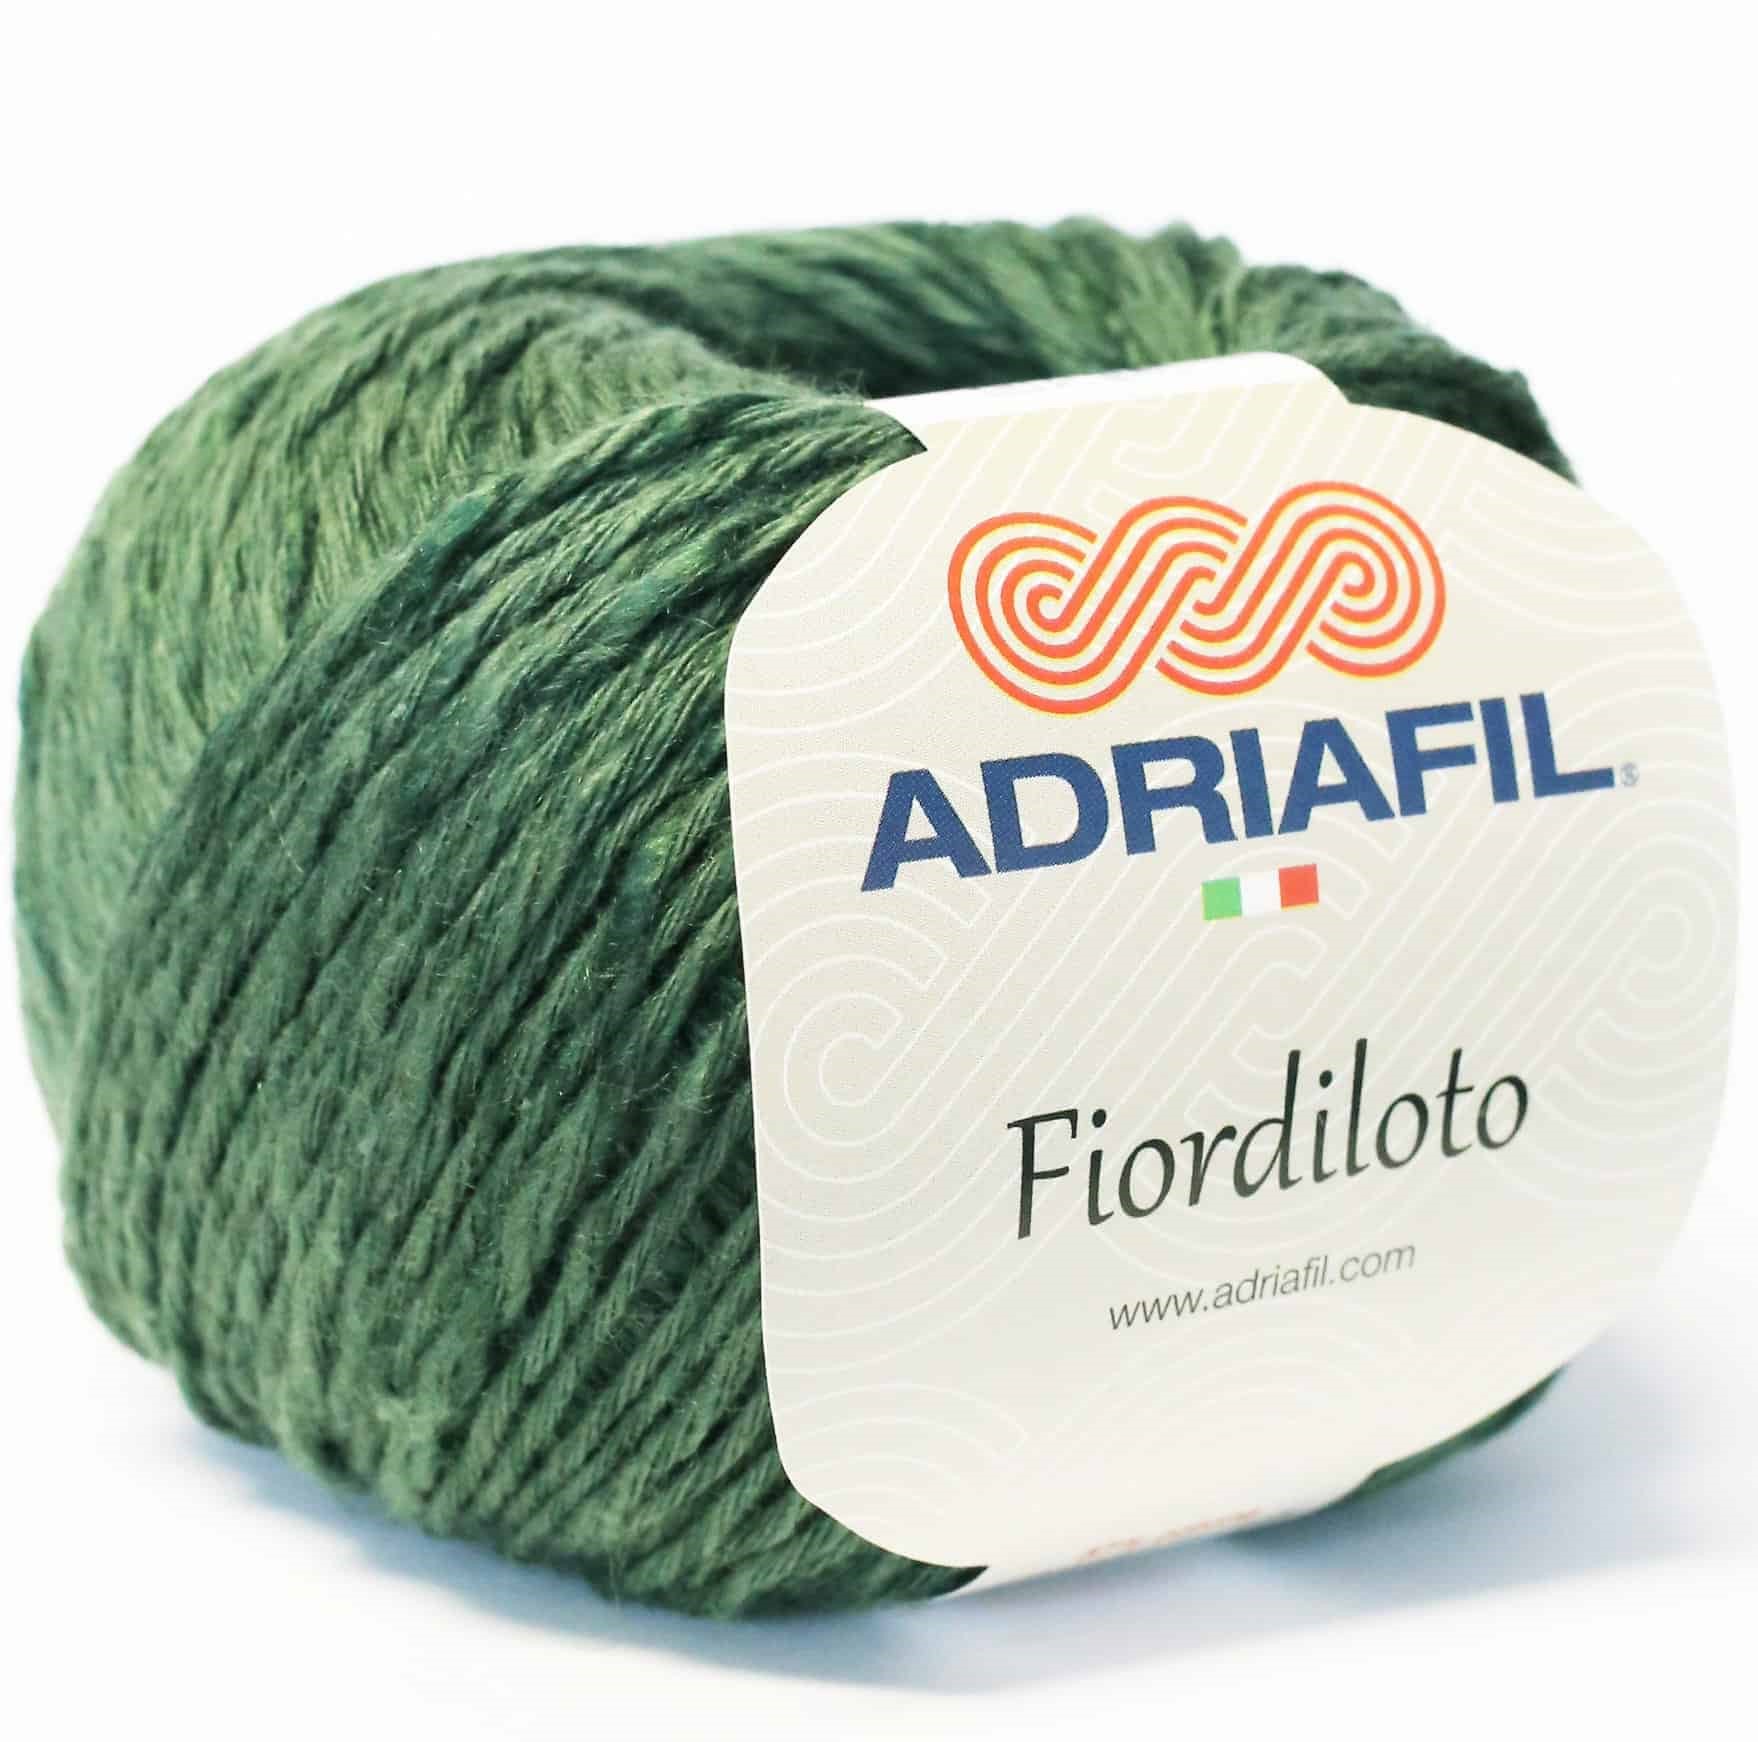 Yarn - Adriafil Fiordiloto 4ply / Dk in Khaki Colour 26